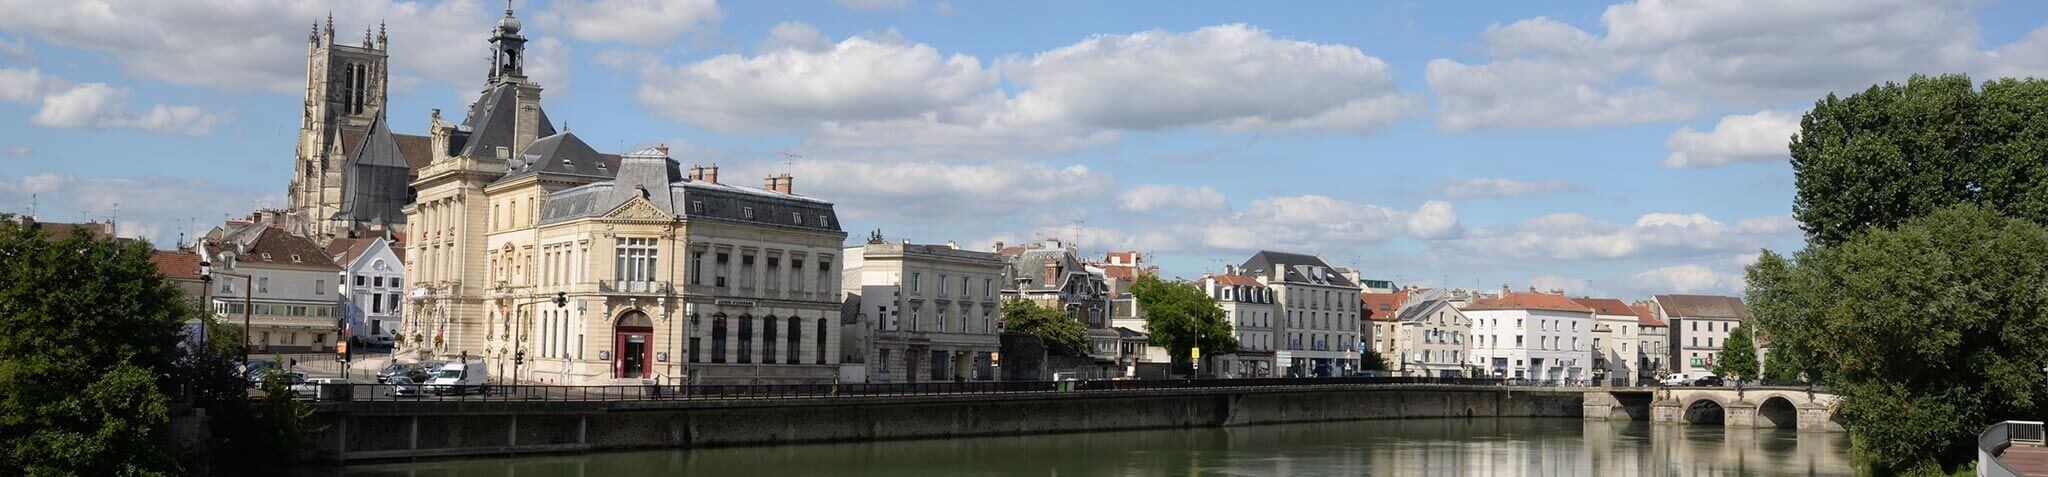 Immobilier neuf en Seine-et-Marne